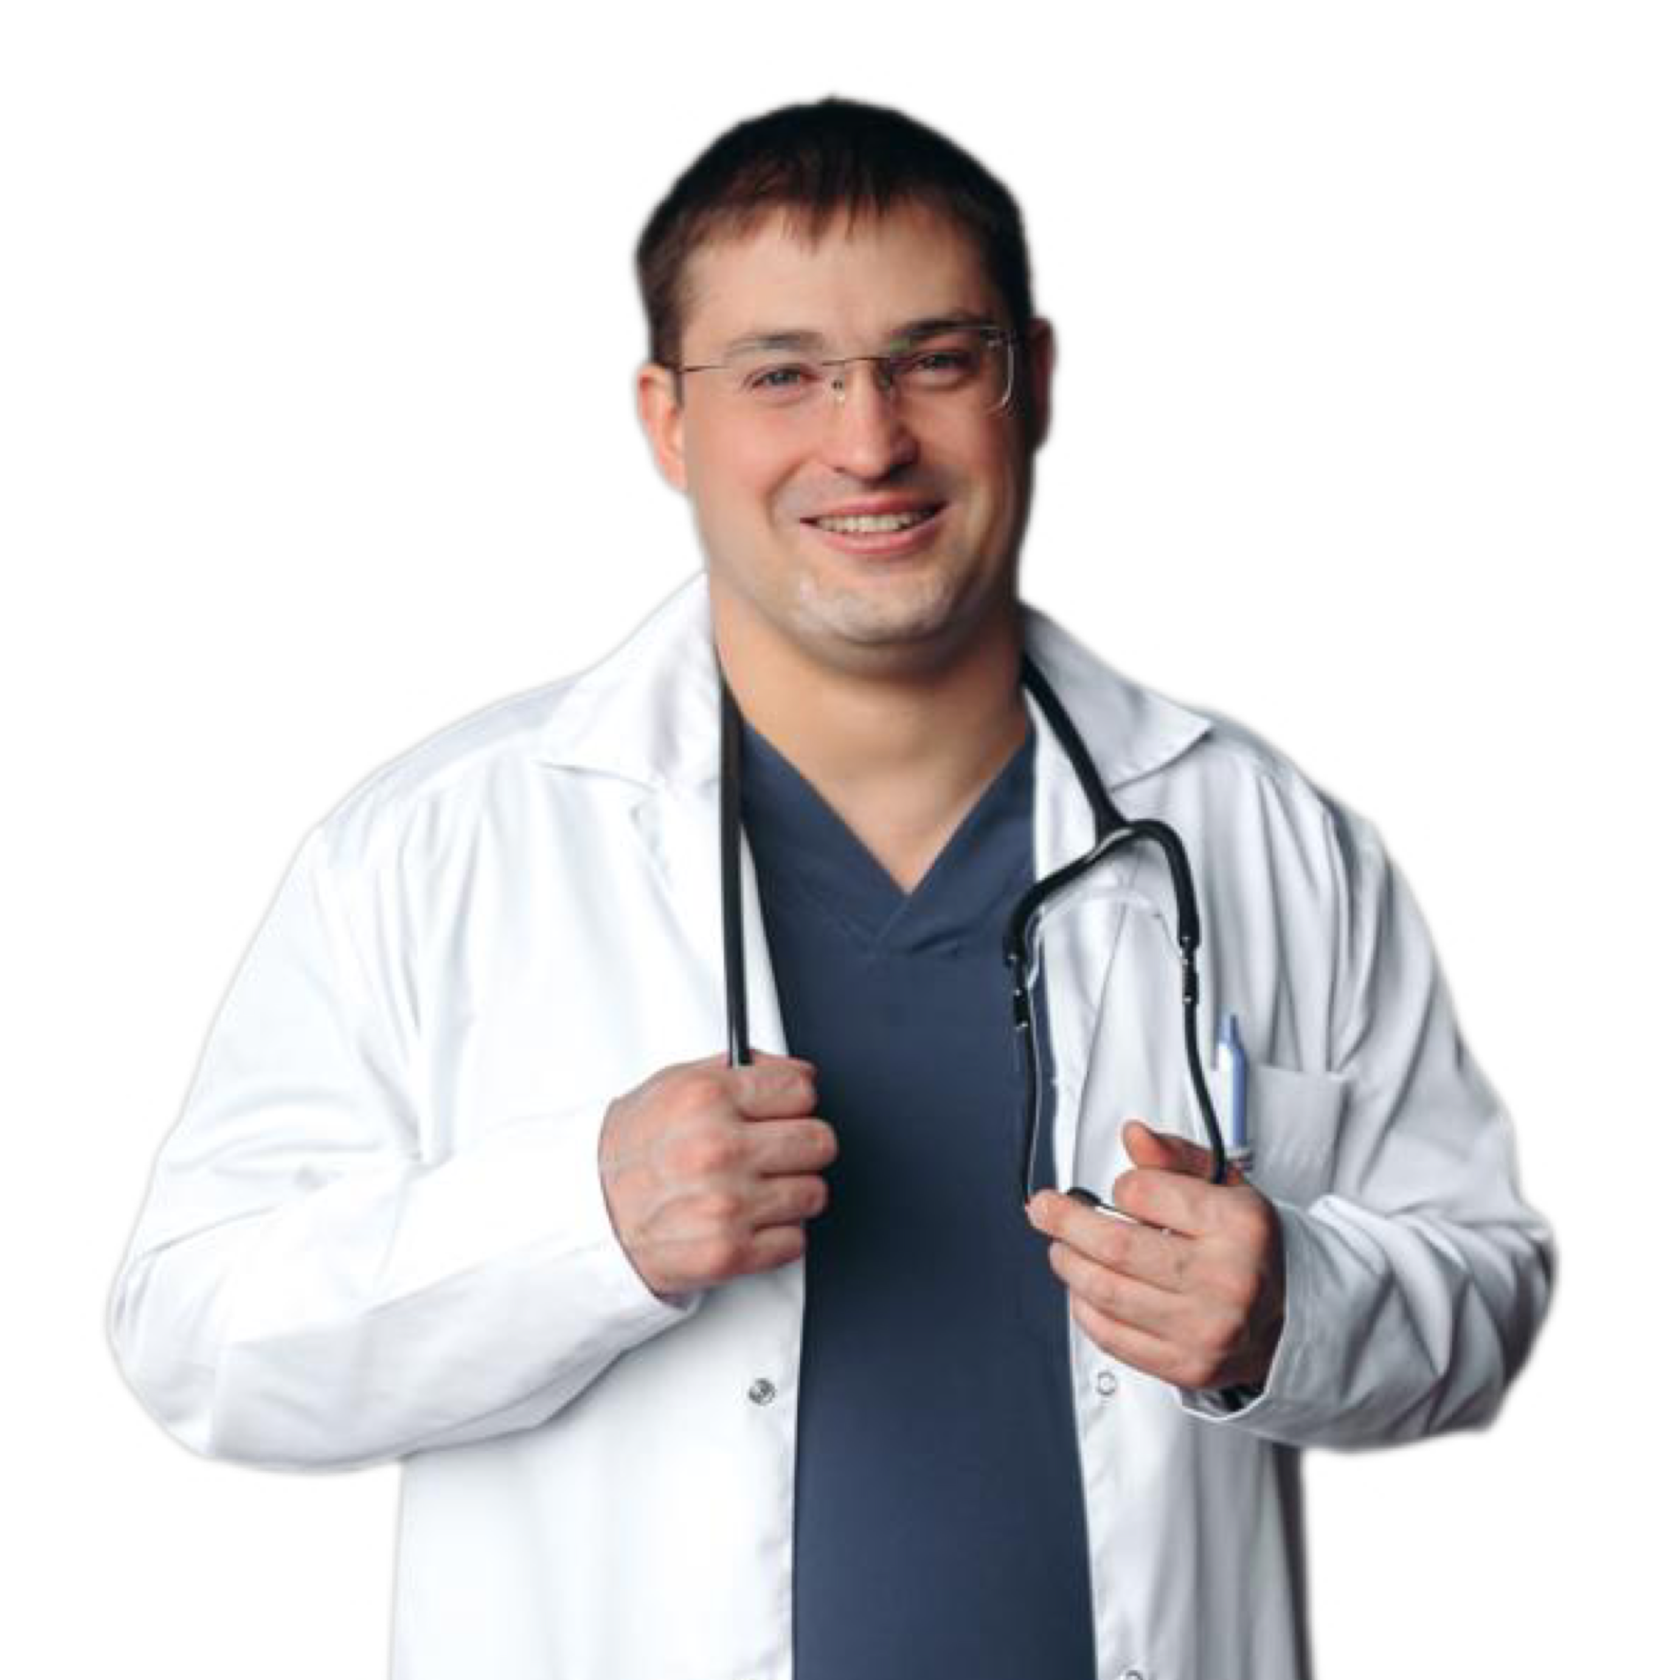 Рейтинг врачей краснодара